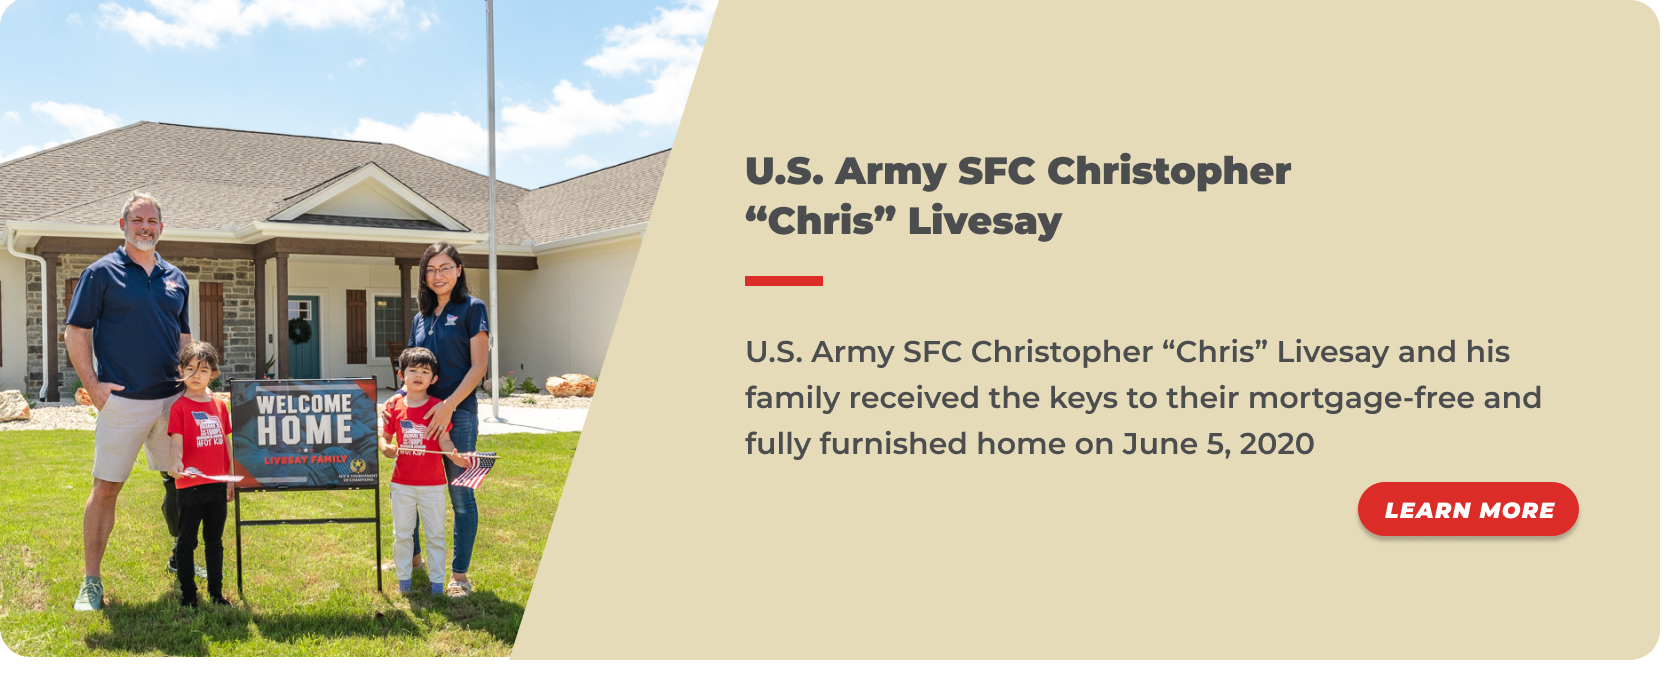 33 - U.S. Army SFC Christopher “Chris” Livesay